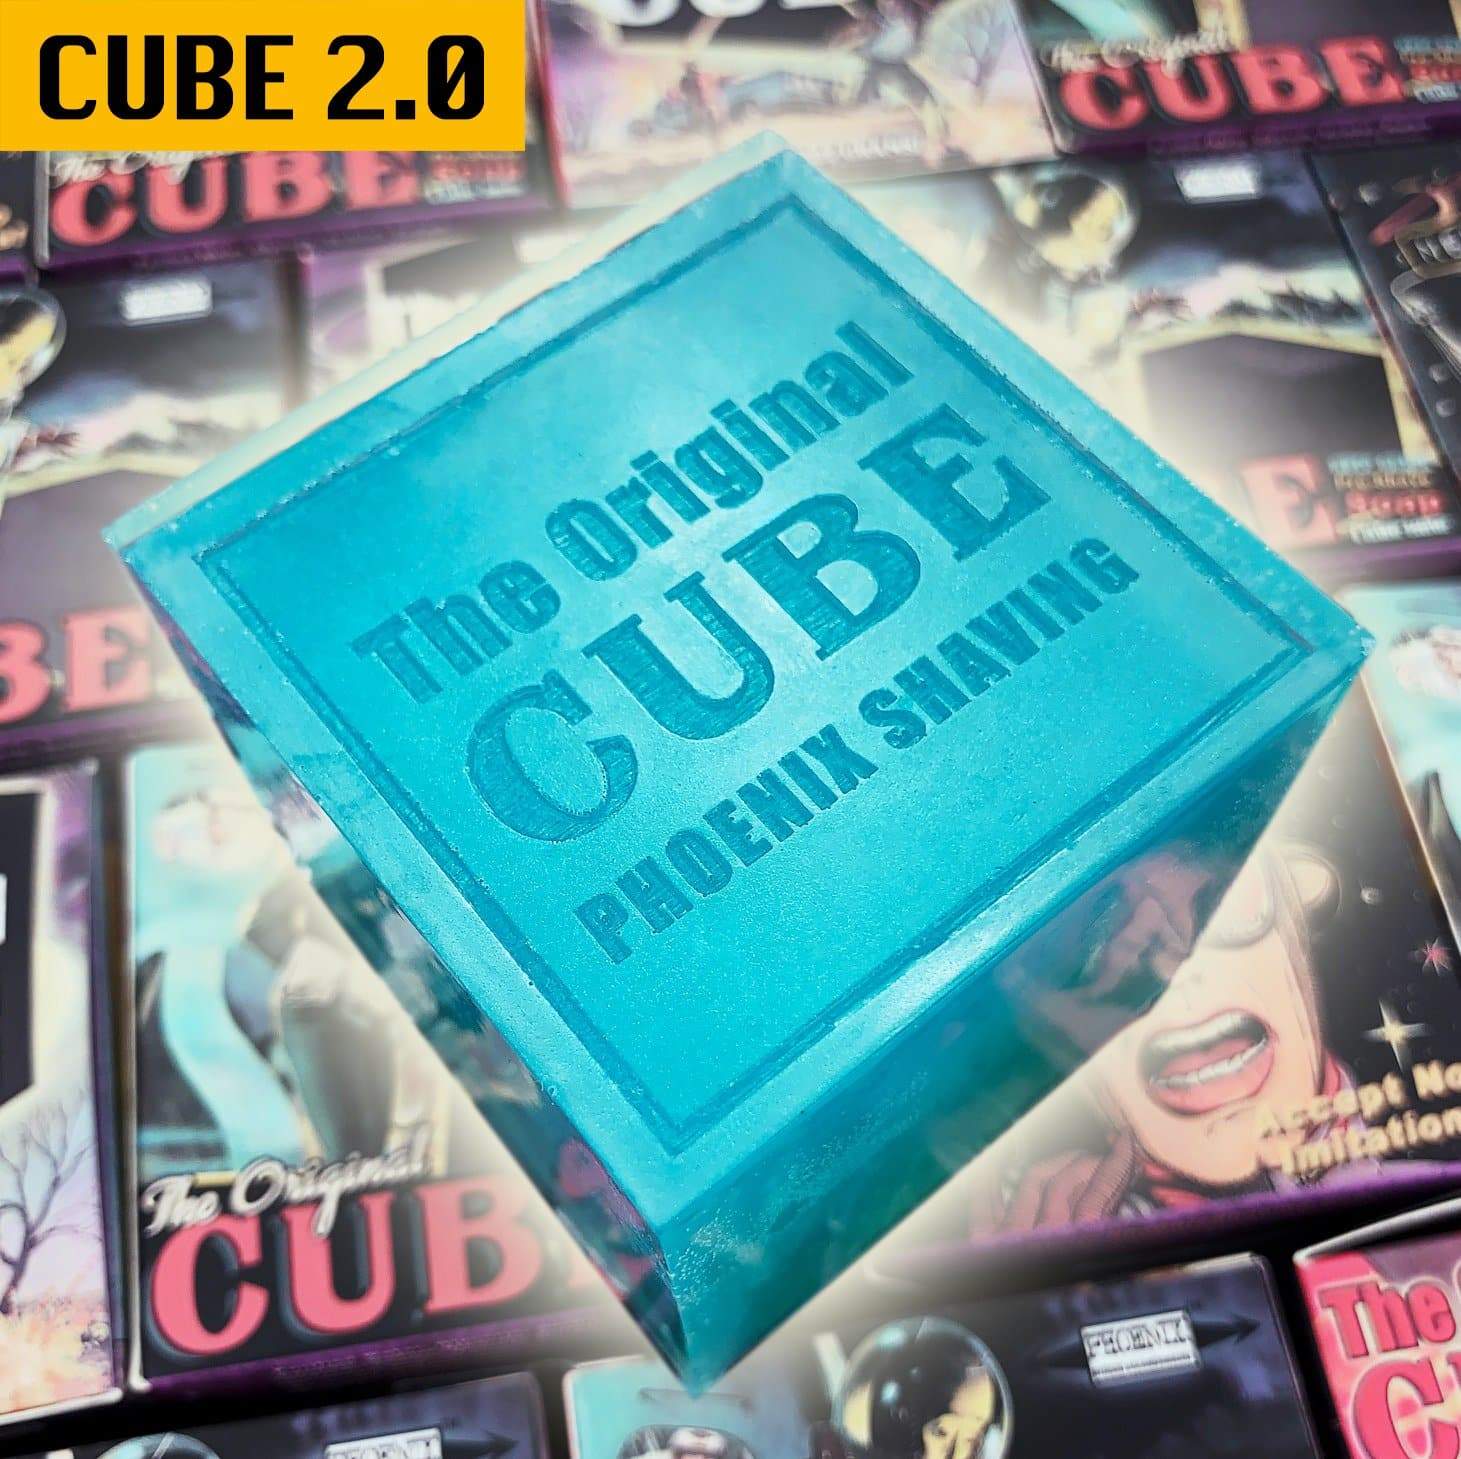 Vintage ice cube t - Gem